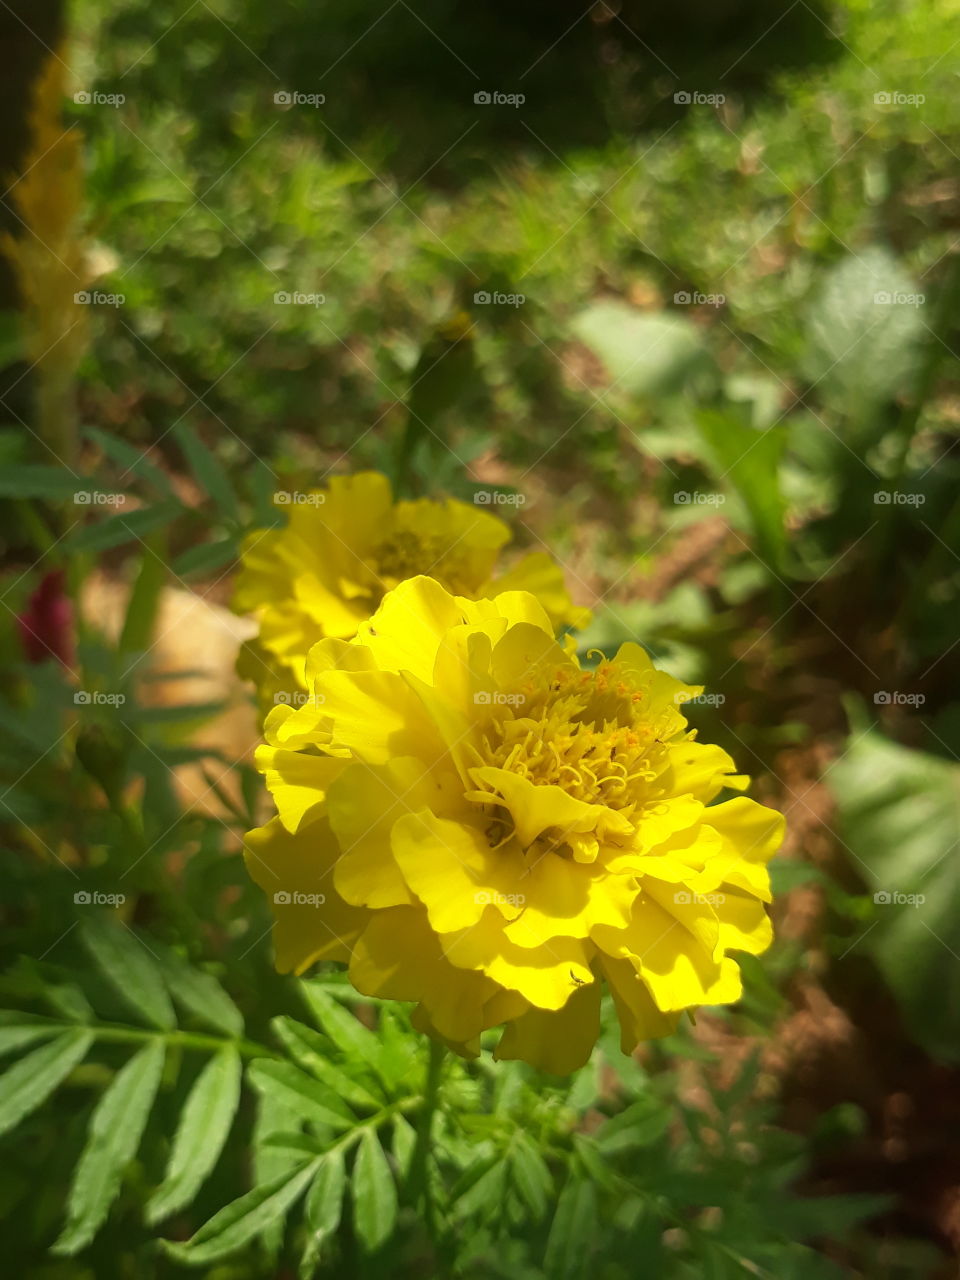 The beautiful yellow flowers.